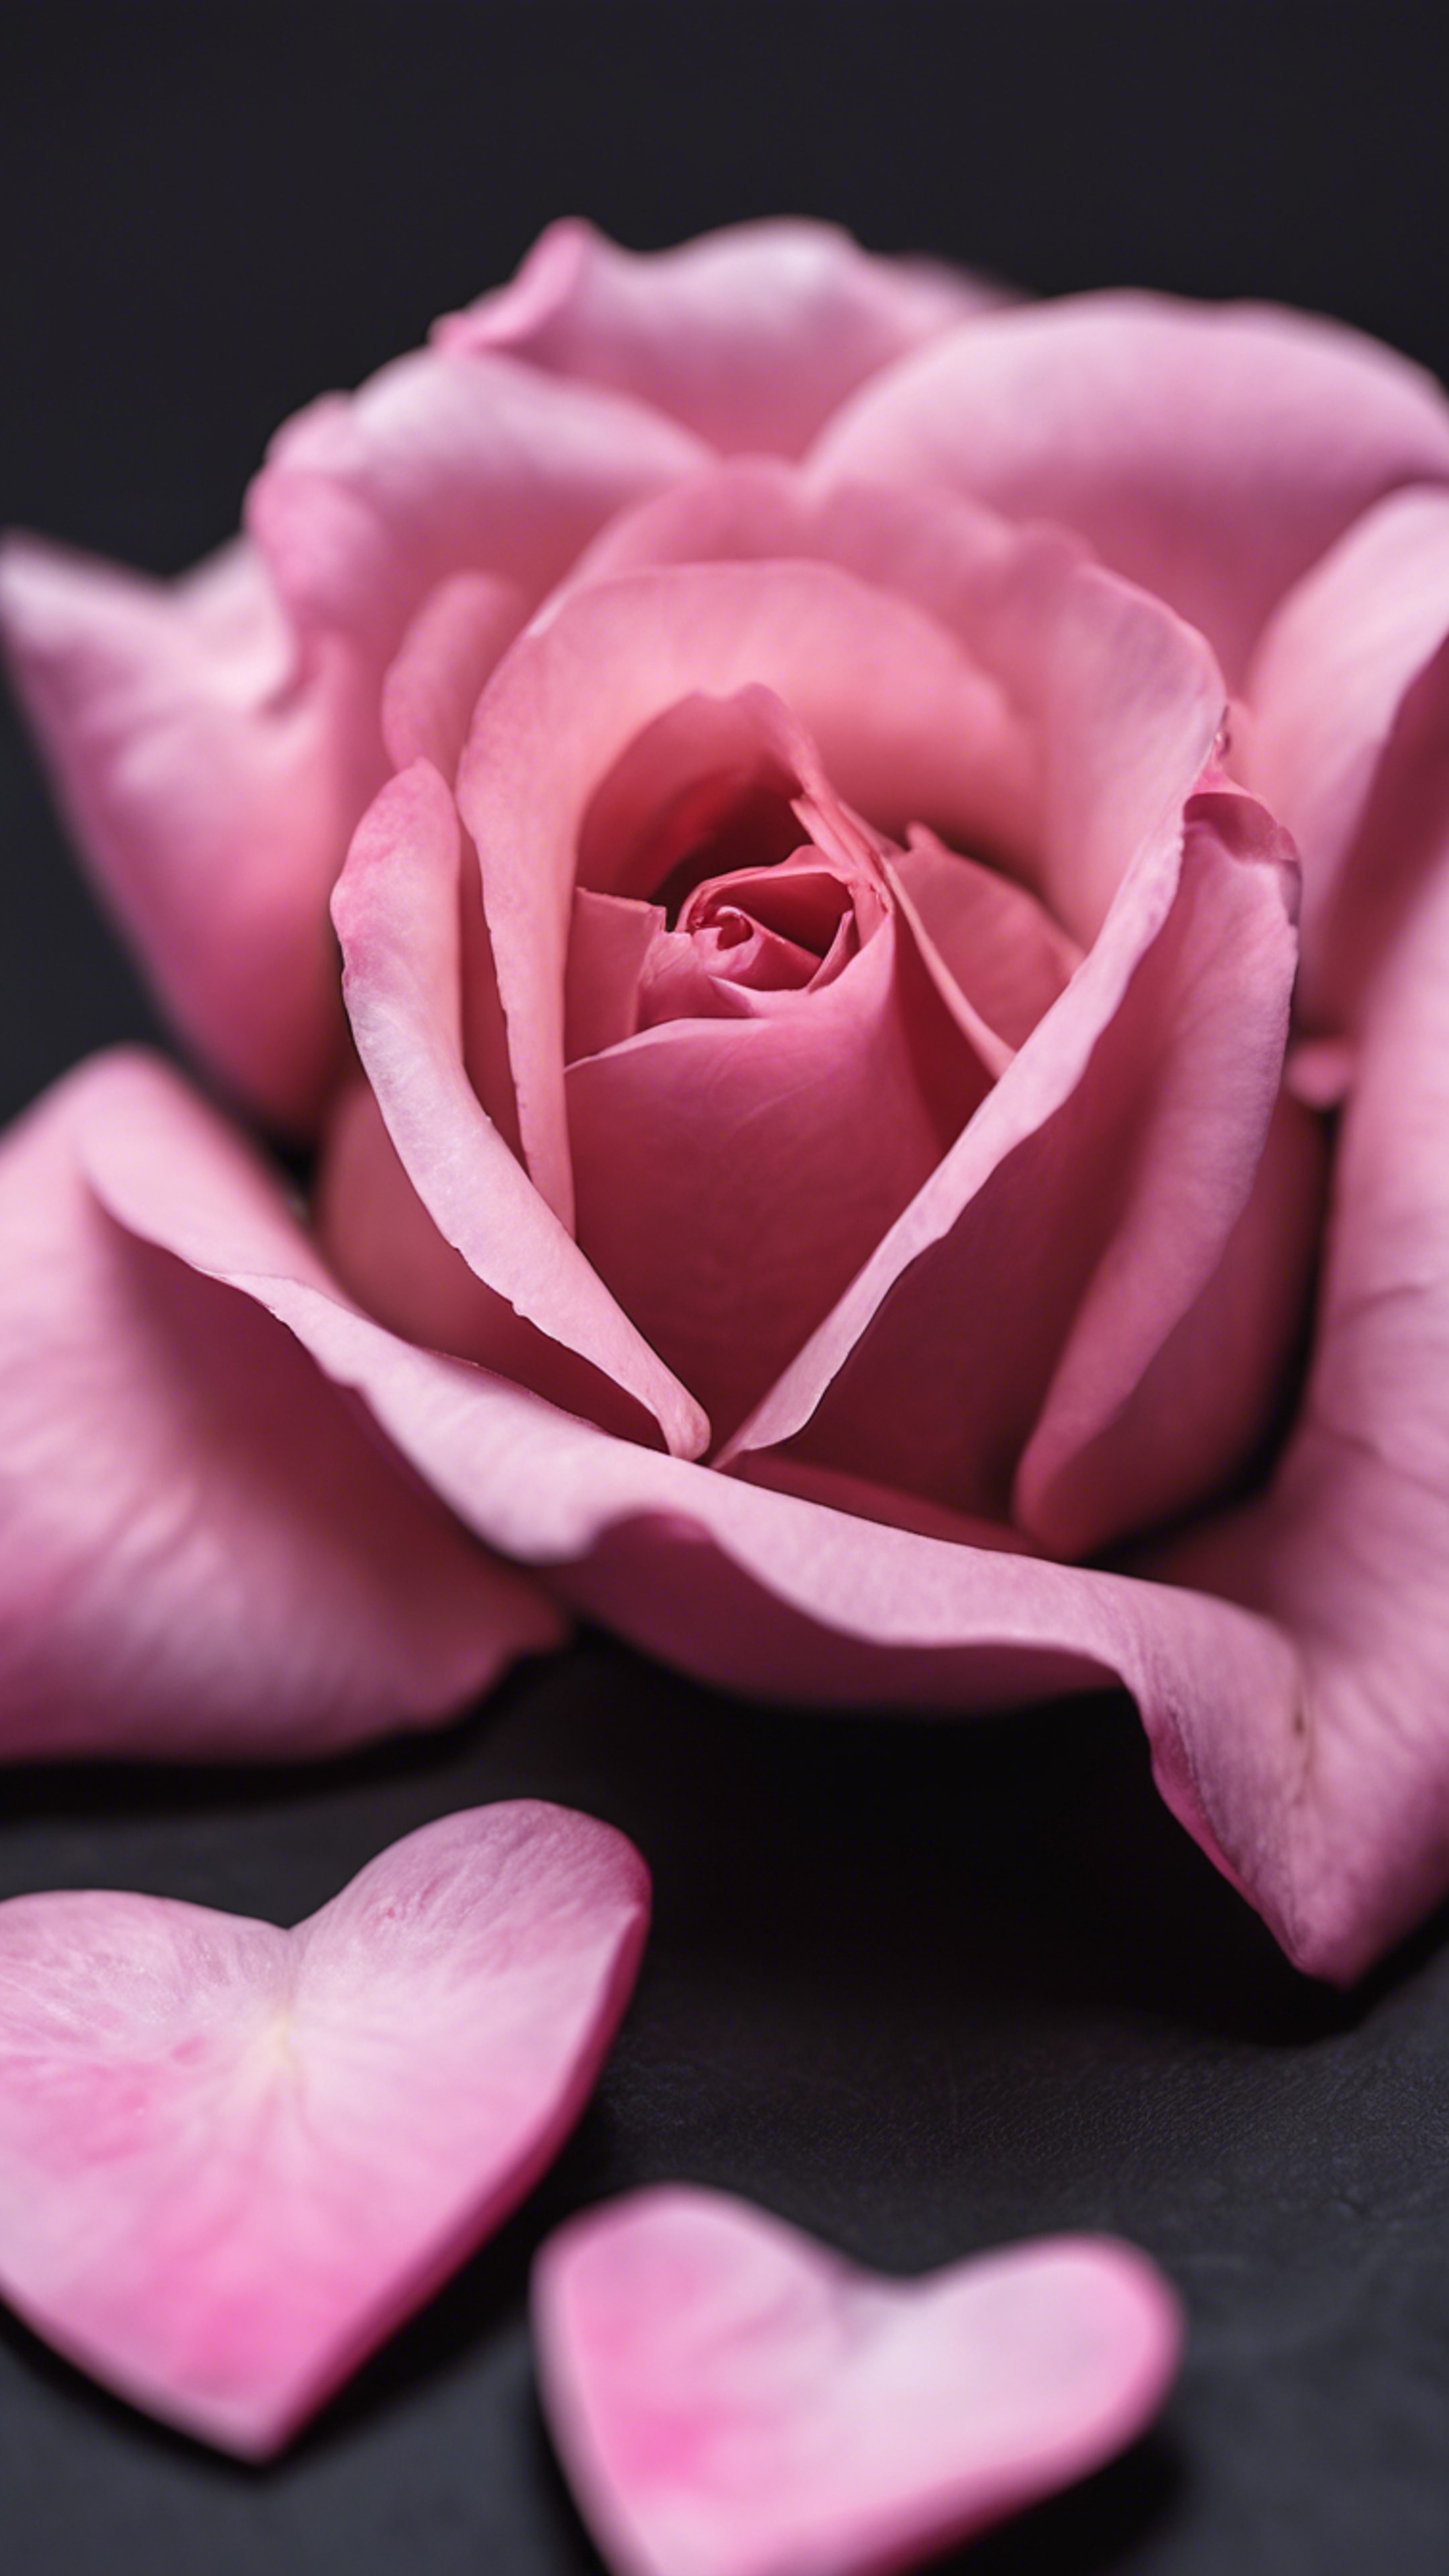 A single, perfect pink heart-shaped rose petal on a black table. Wallpaper[a14a0e64e3fd4358915b]